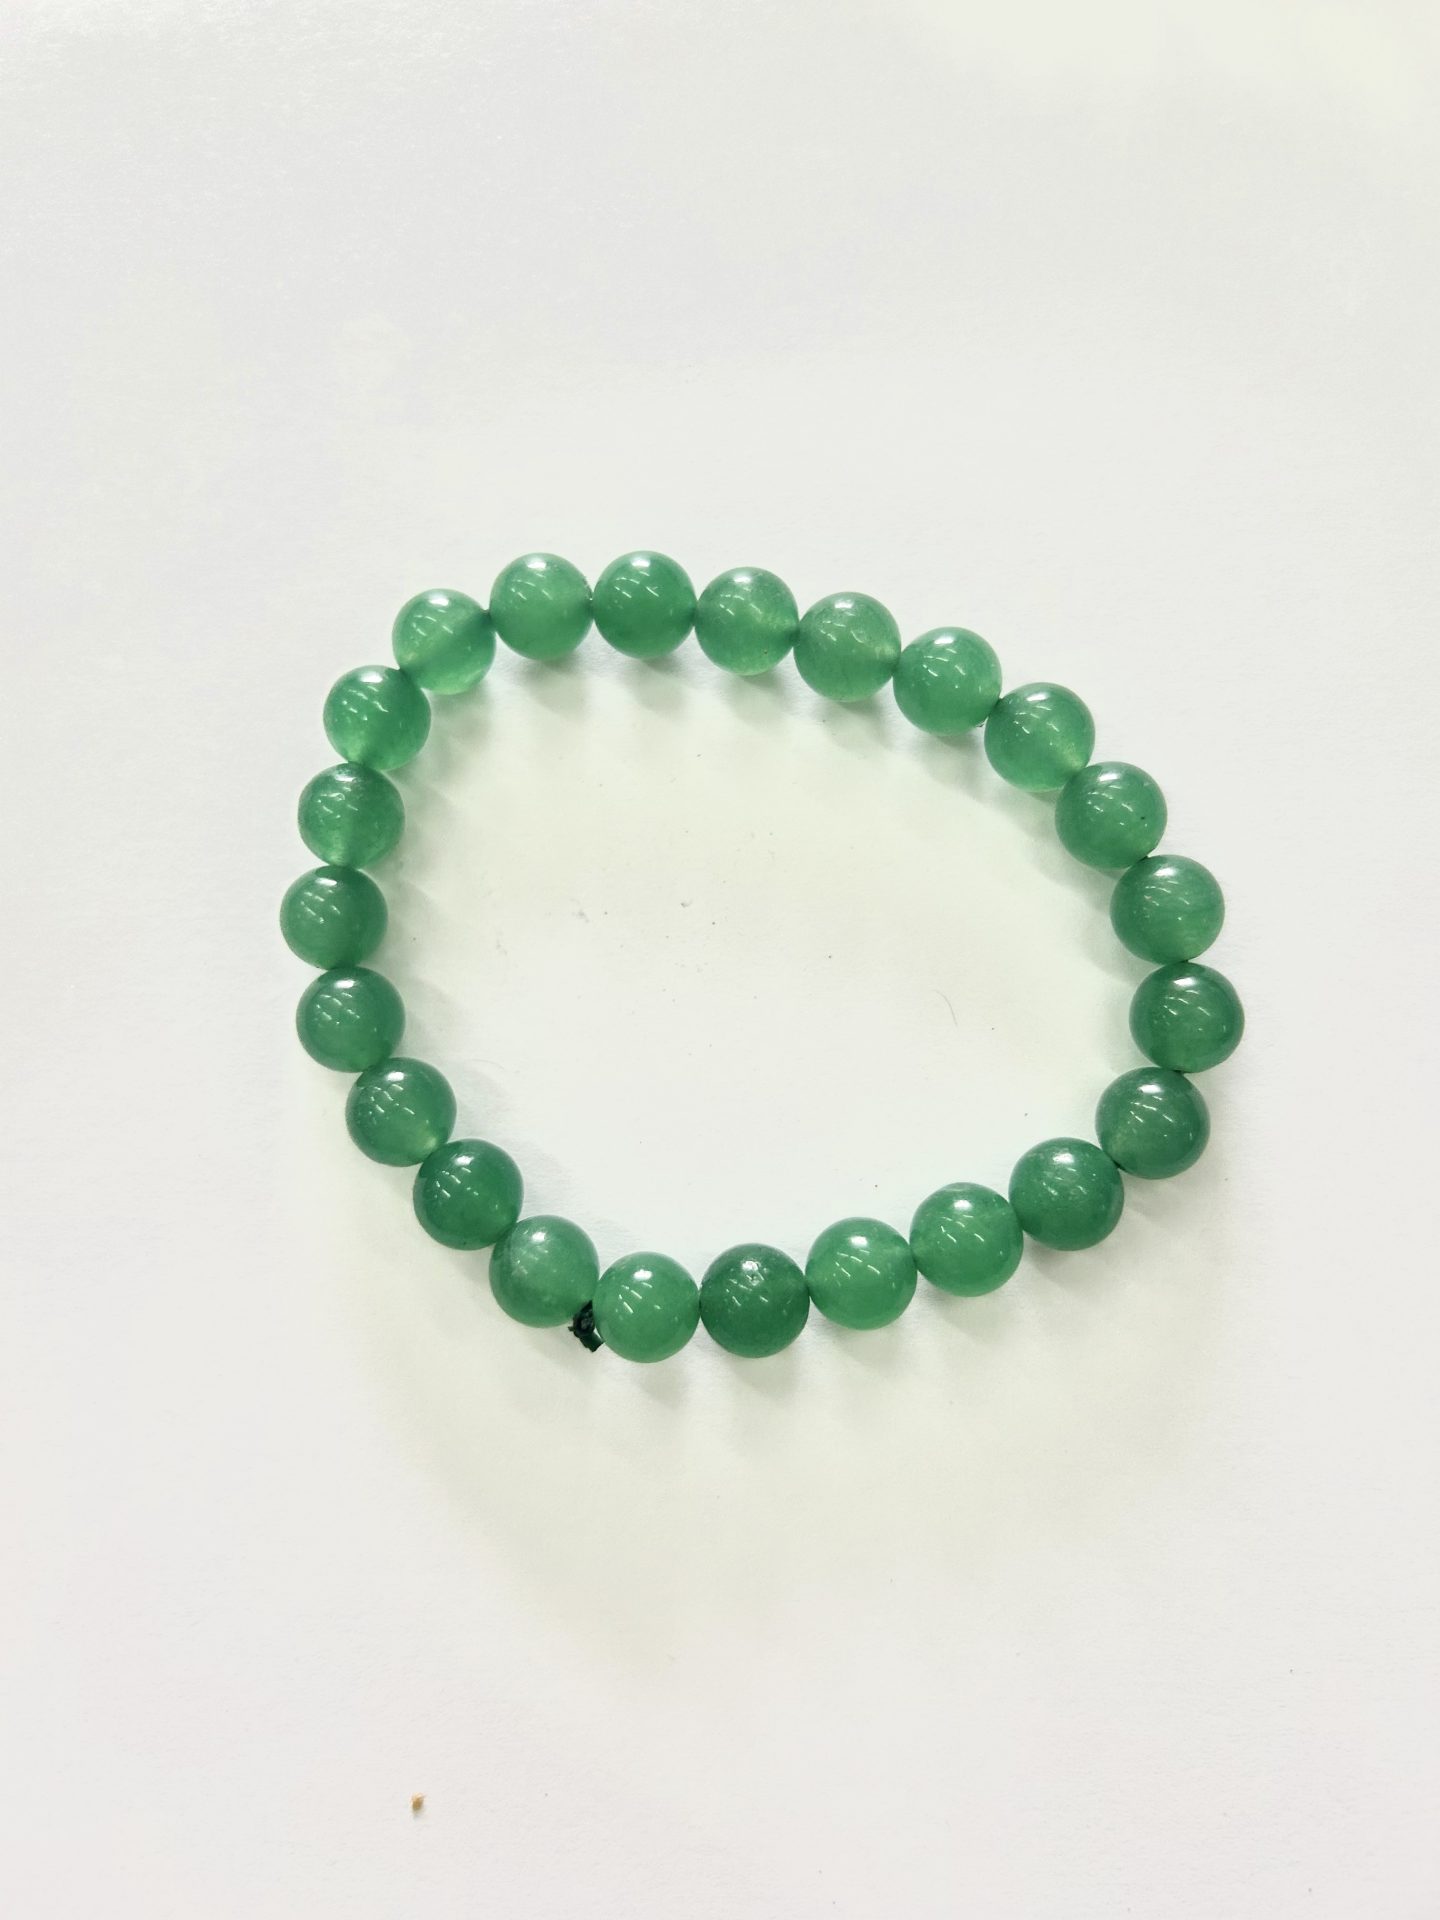 8mm green jade bracelet